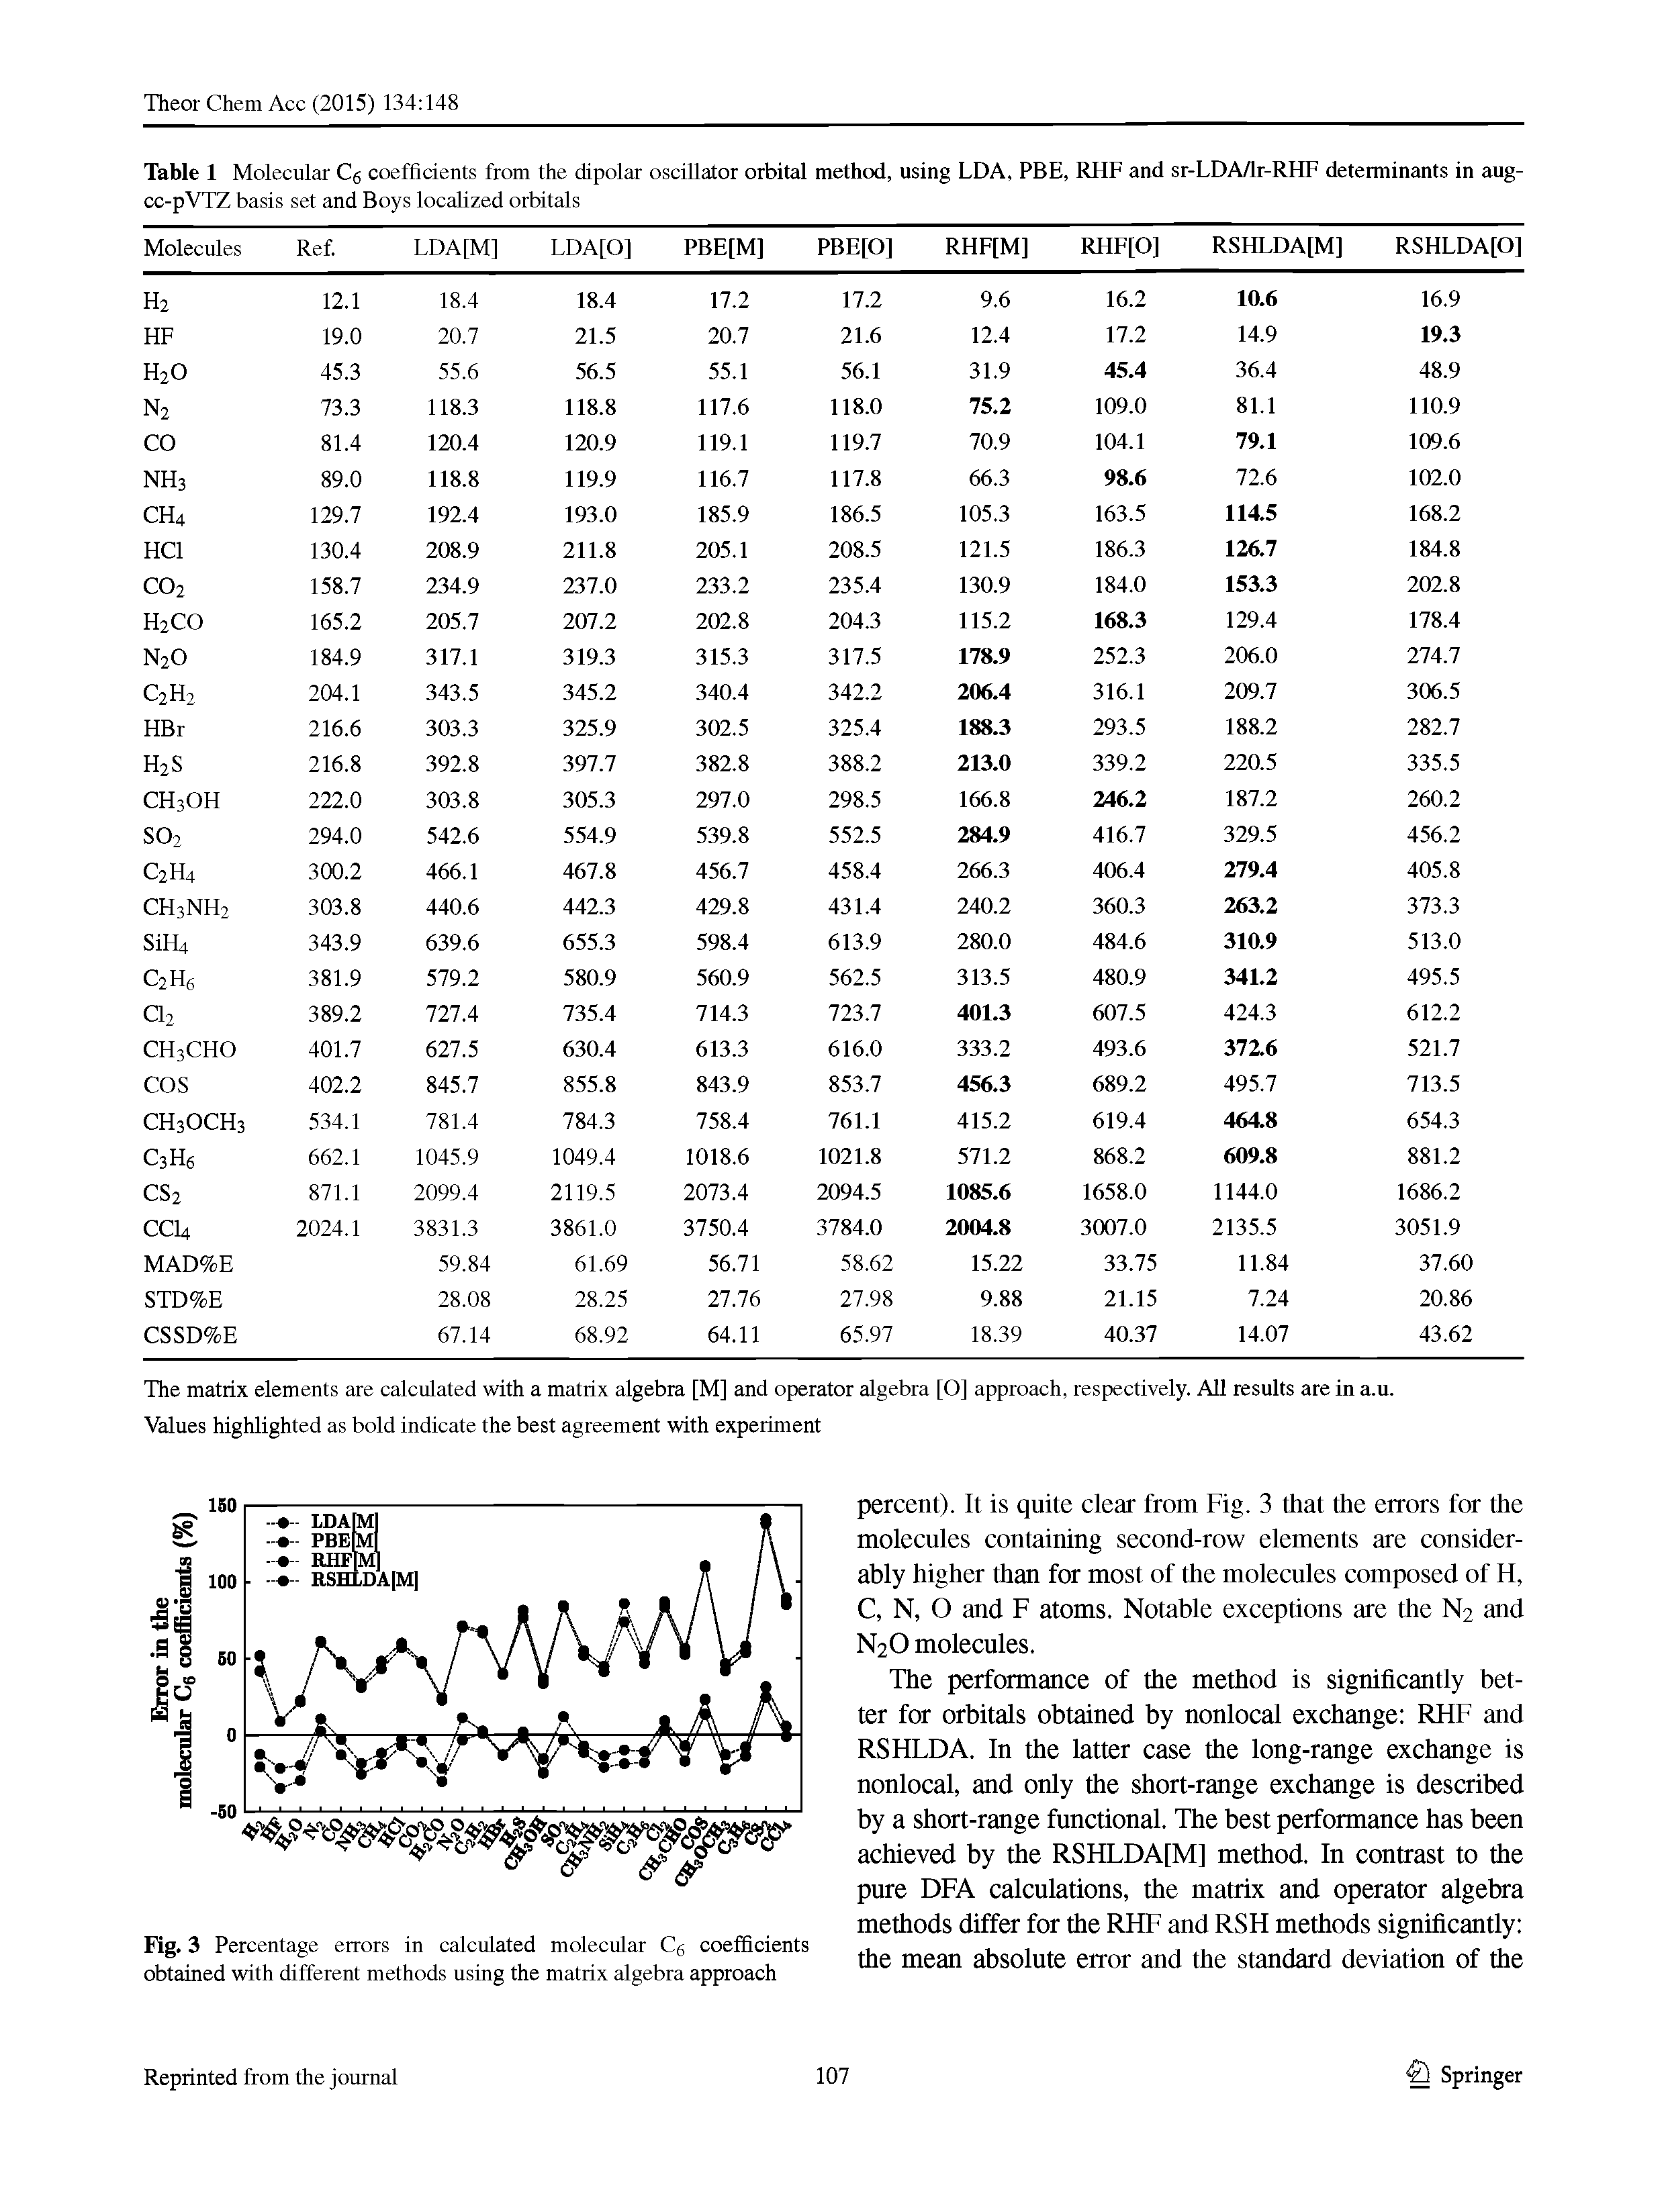 Table 1 Molecular Cg coefficients from the dipolar oscillator orbited method, using LDA, PBE, RHF and sr-LDAdr-RHF deteminrmts in aug-cc-pVTZ basis set and Boys localized orbitals ...